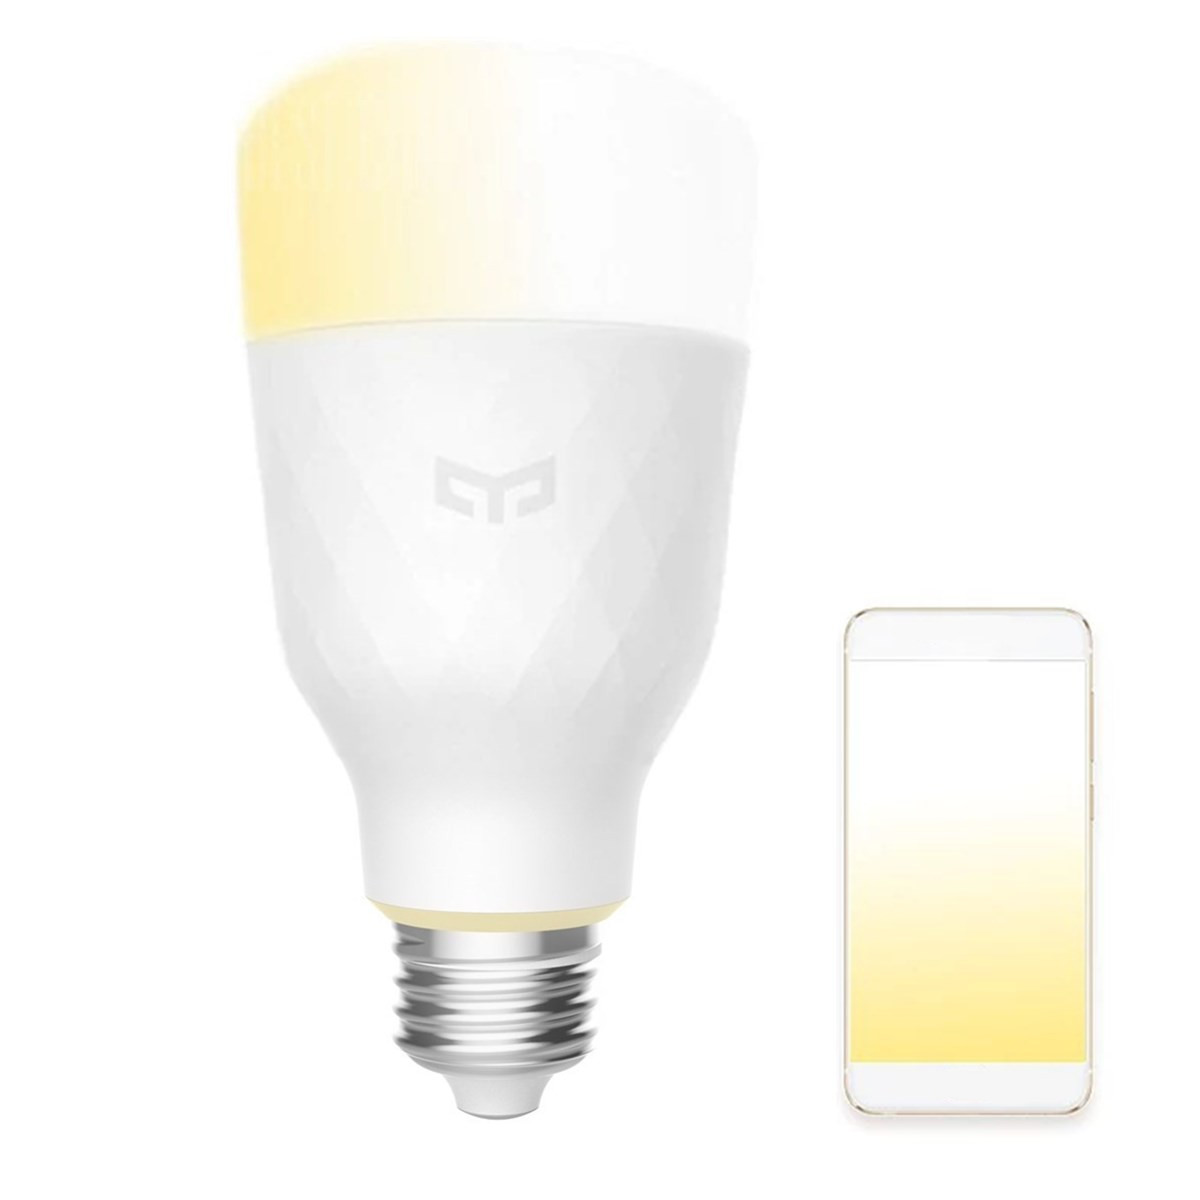 

Yeelight YLDP05YL E27 10 Вт, теплый белый для Daywhite WiFi APP Smart LED Лампа переменного тока 100-240 В (экосистемный